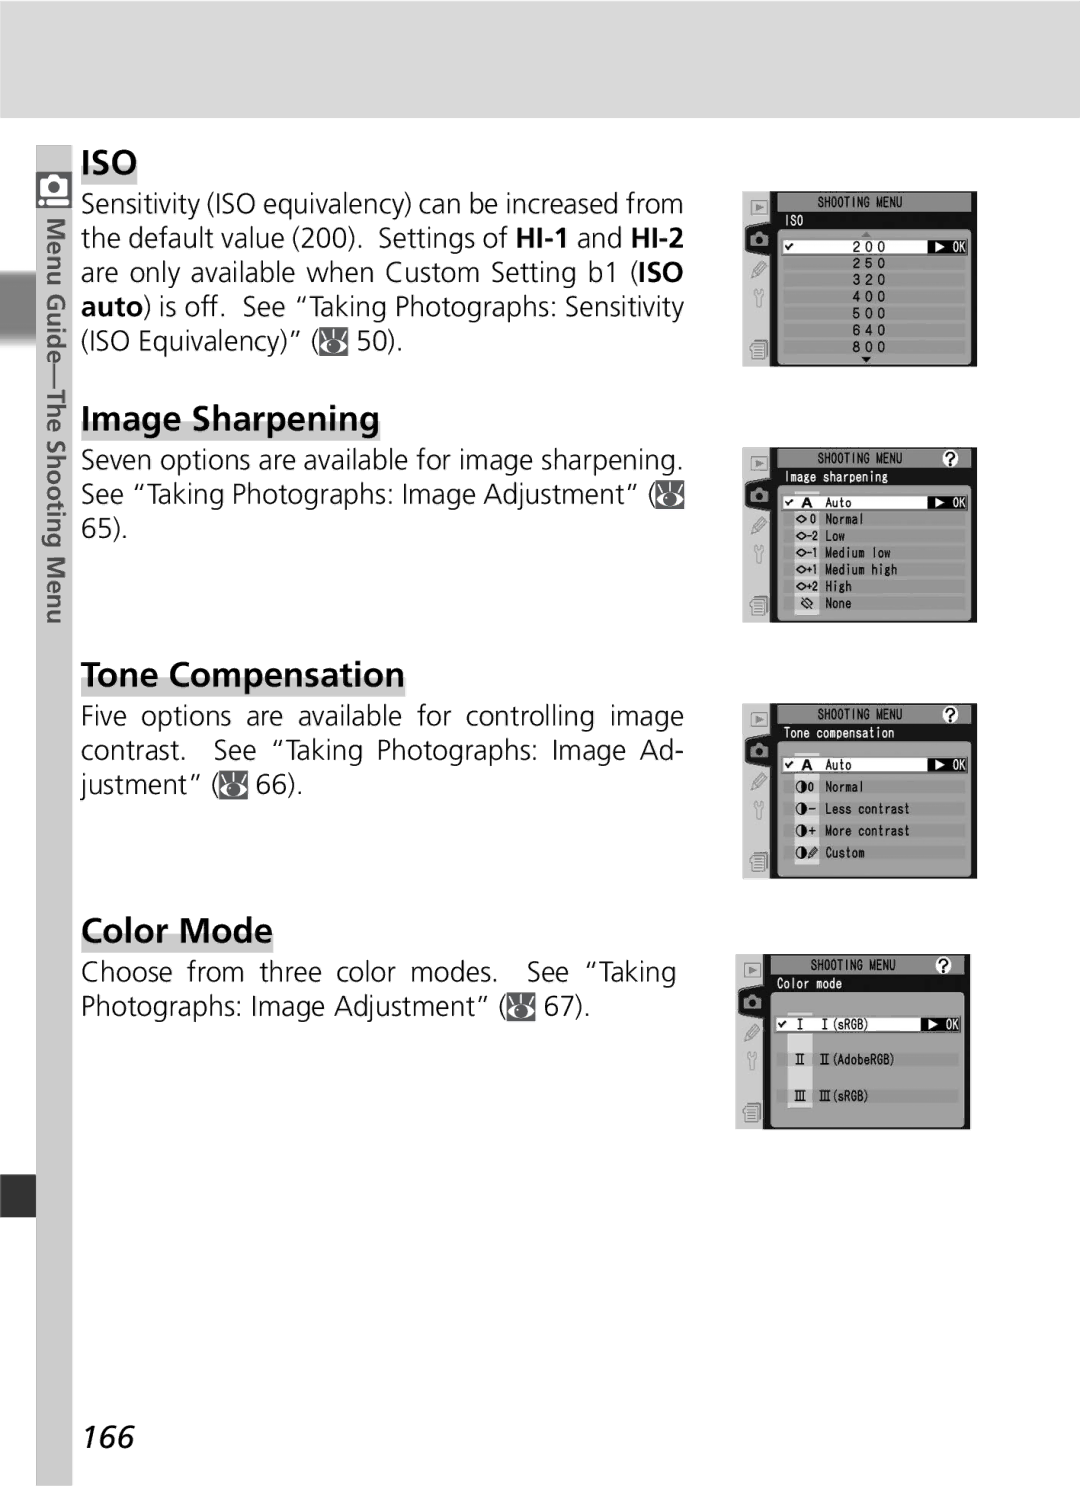 Nikon D2Hs manual Image Sharpening, Tone Compensation, Color Mode, 166 